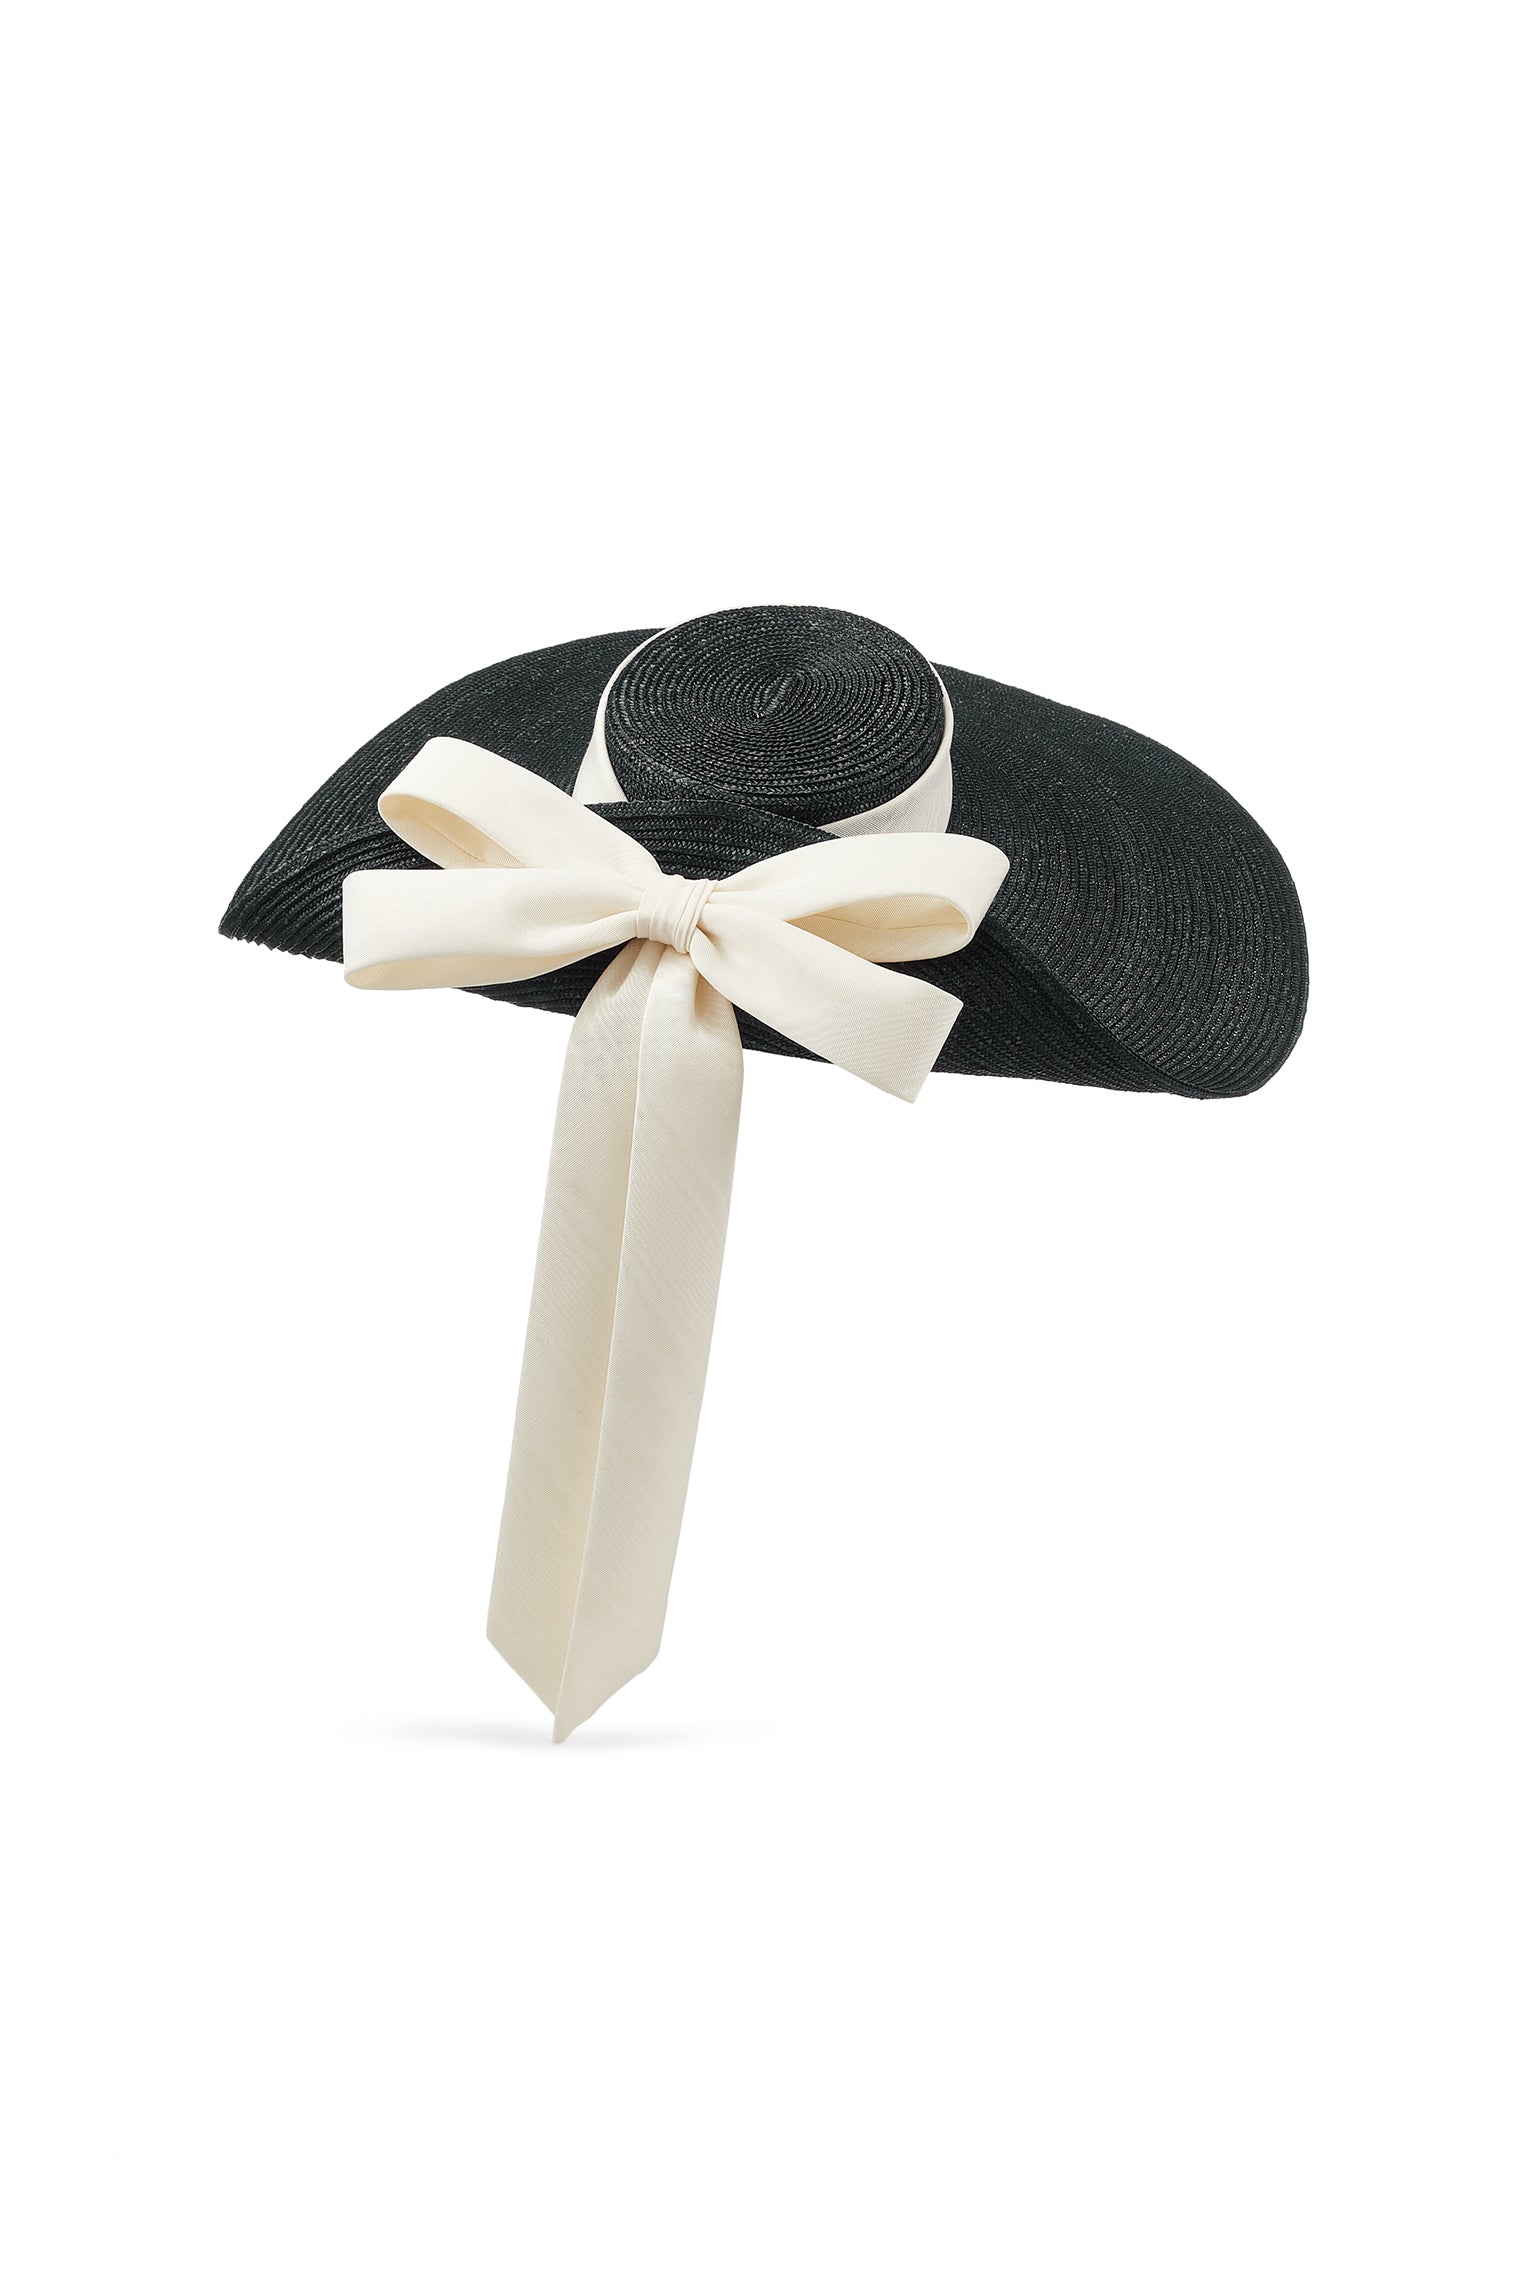 Lady Grey Black Wide Brim Hat - Products - Lock & Co. Hatters London UK